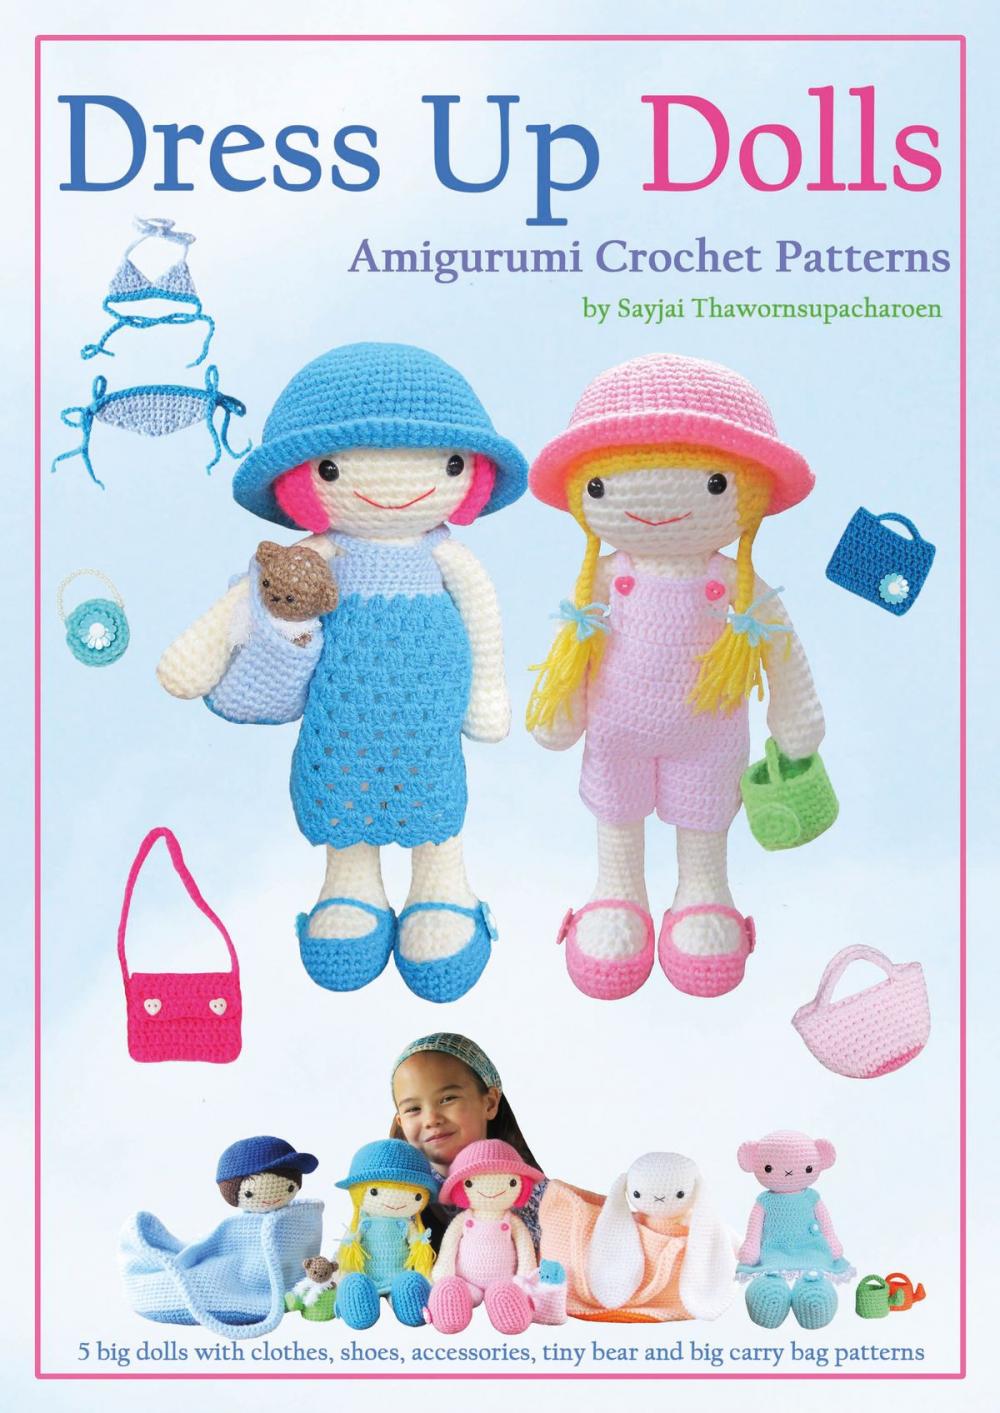 Big bigCover of Dress Up Dolls Amigurumi Crochet Patterns